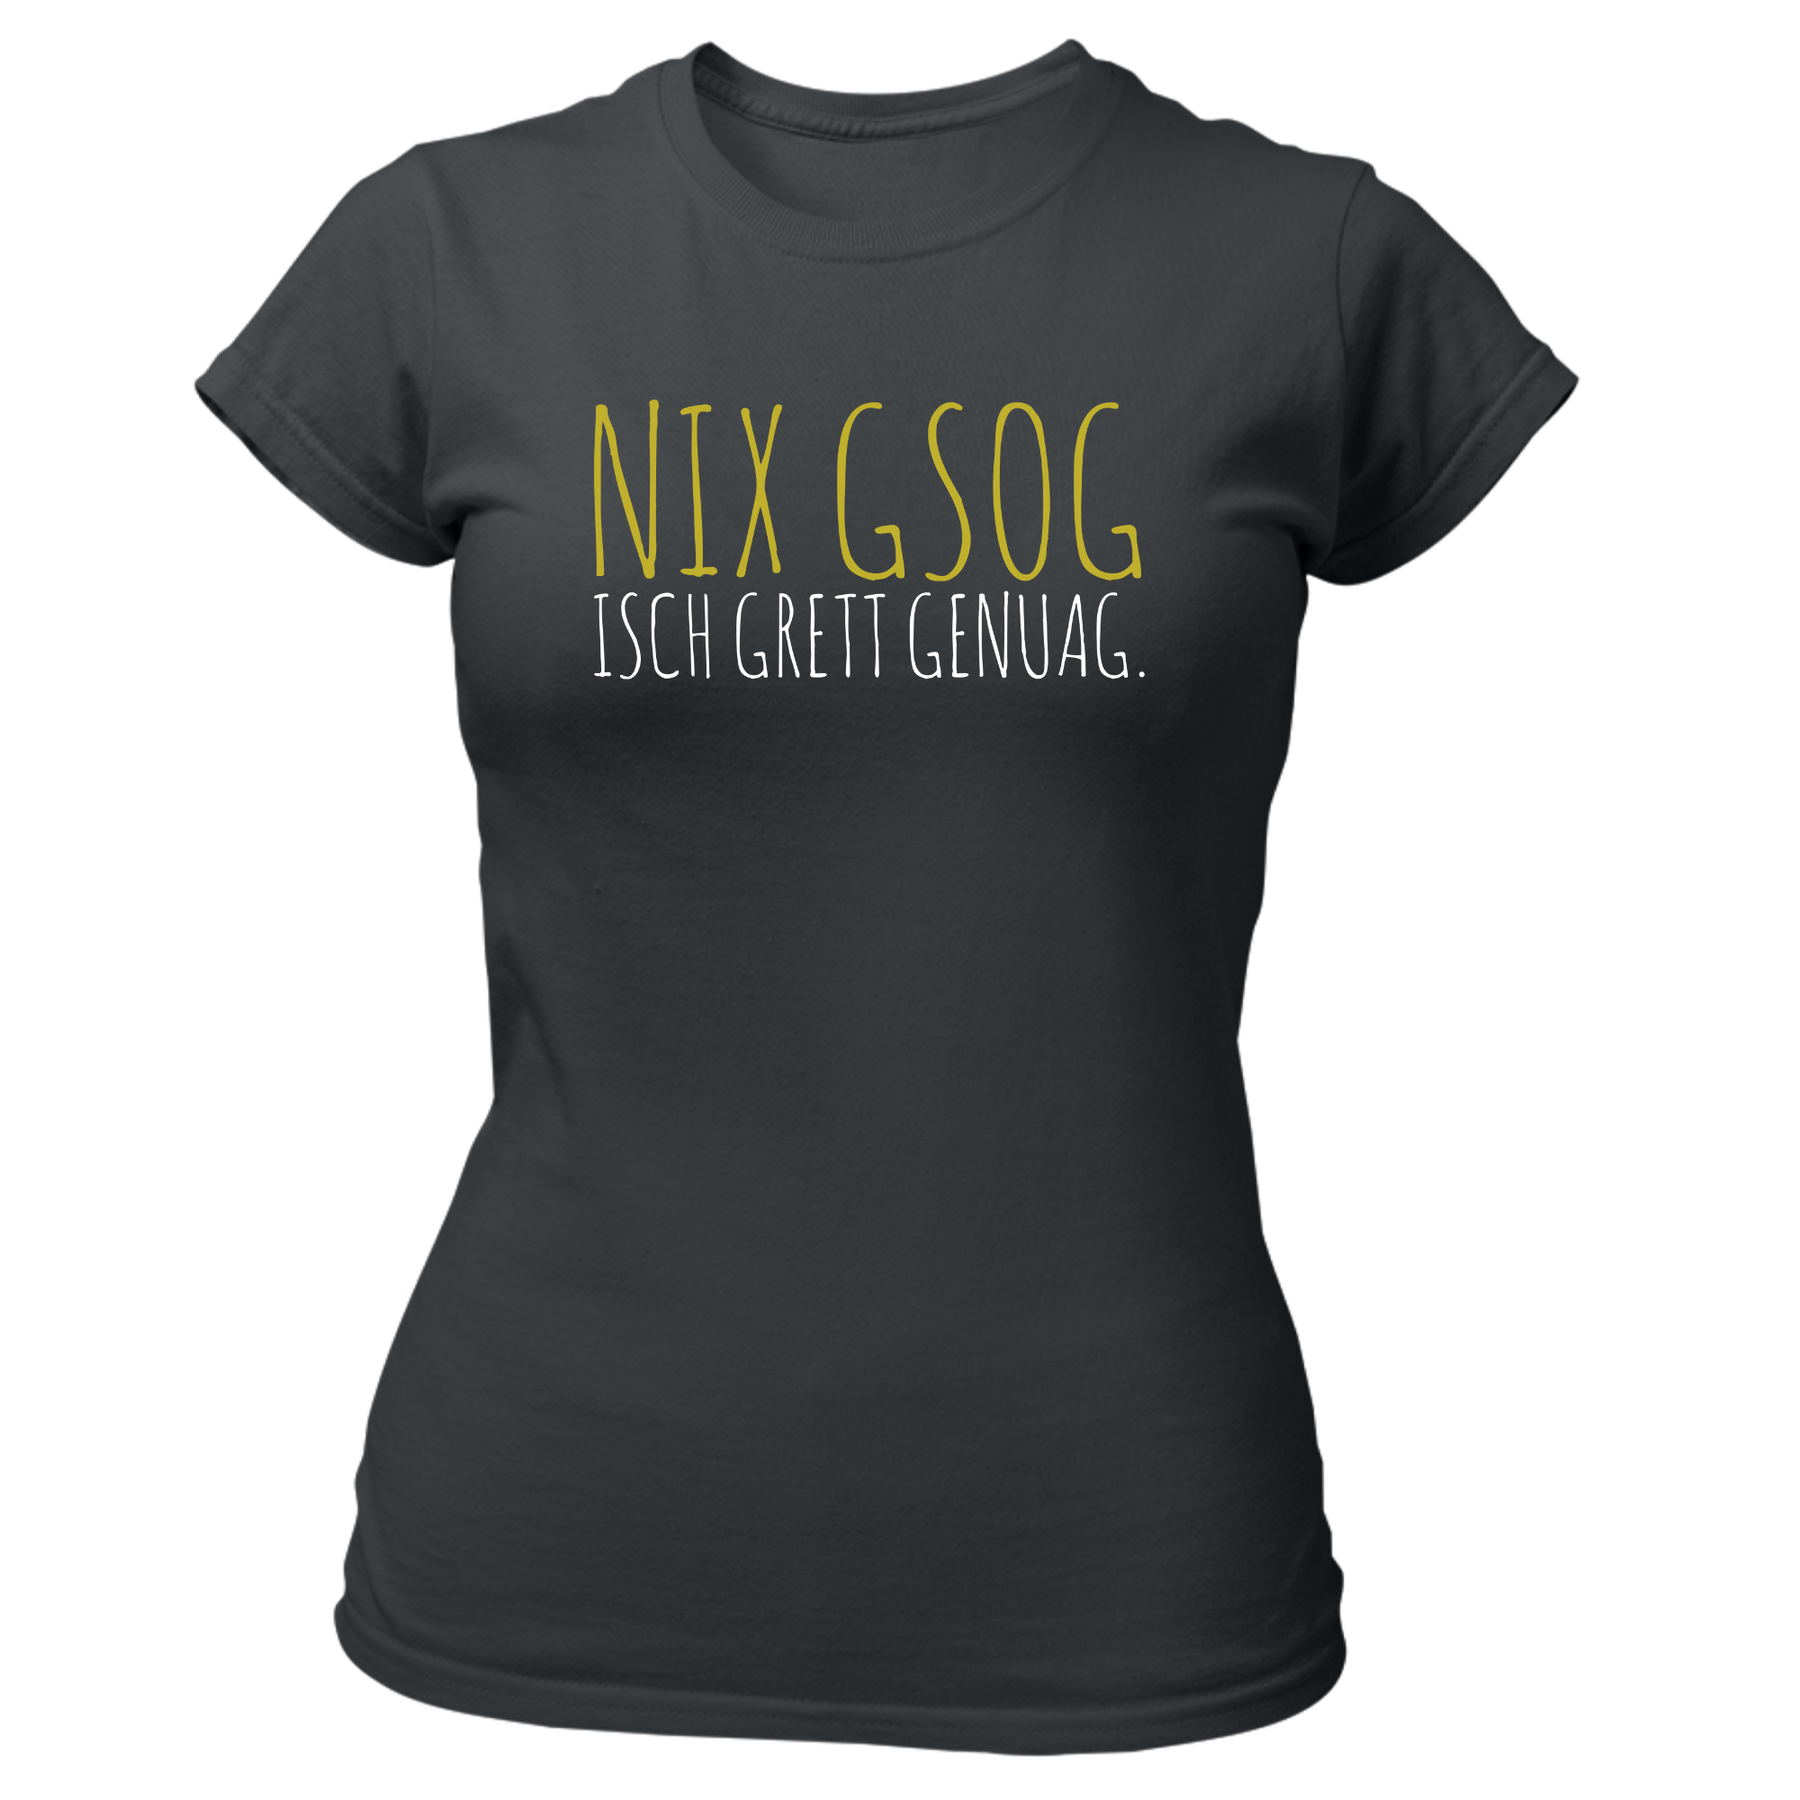 Nix gsog isch grett genuag - Damen Shirt Bio - XS / Grau - Shirts & Tops